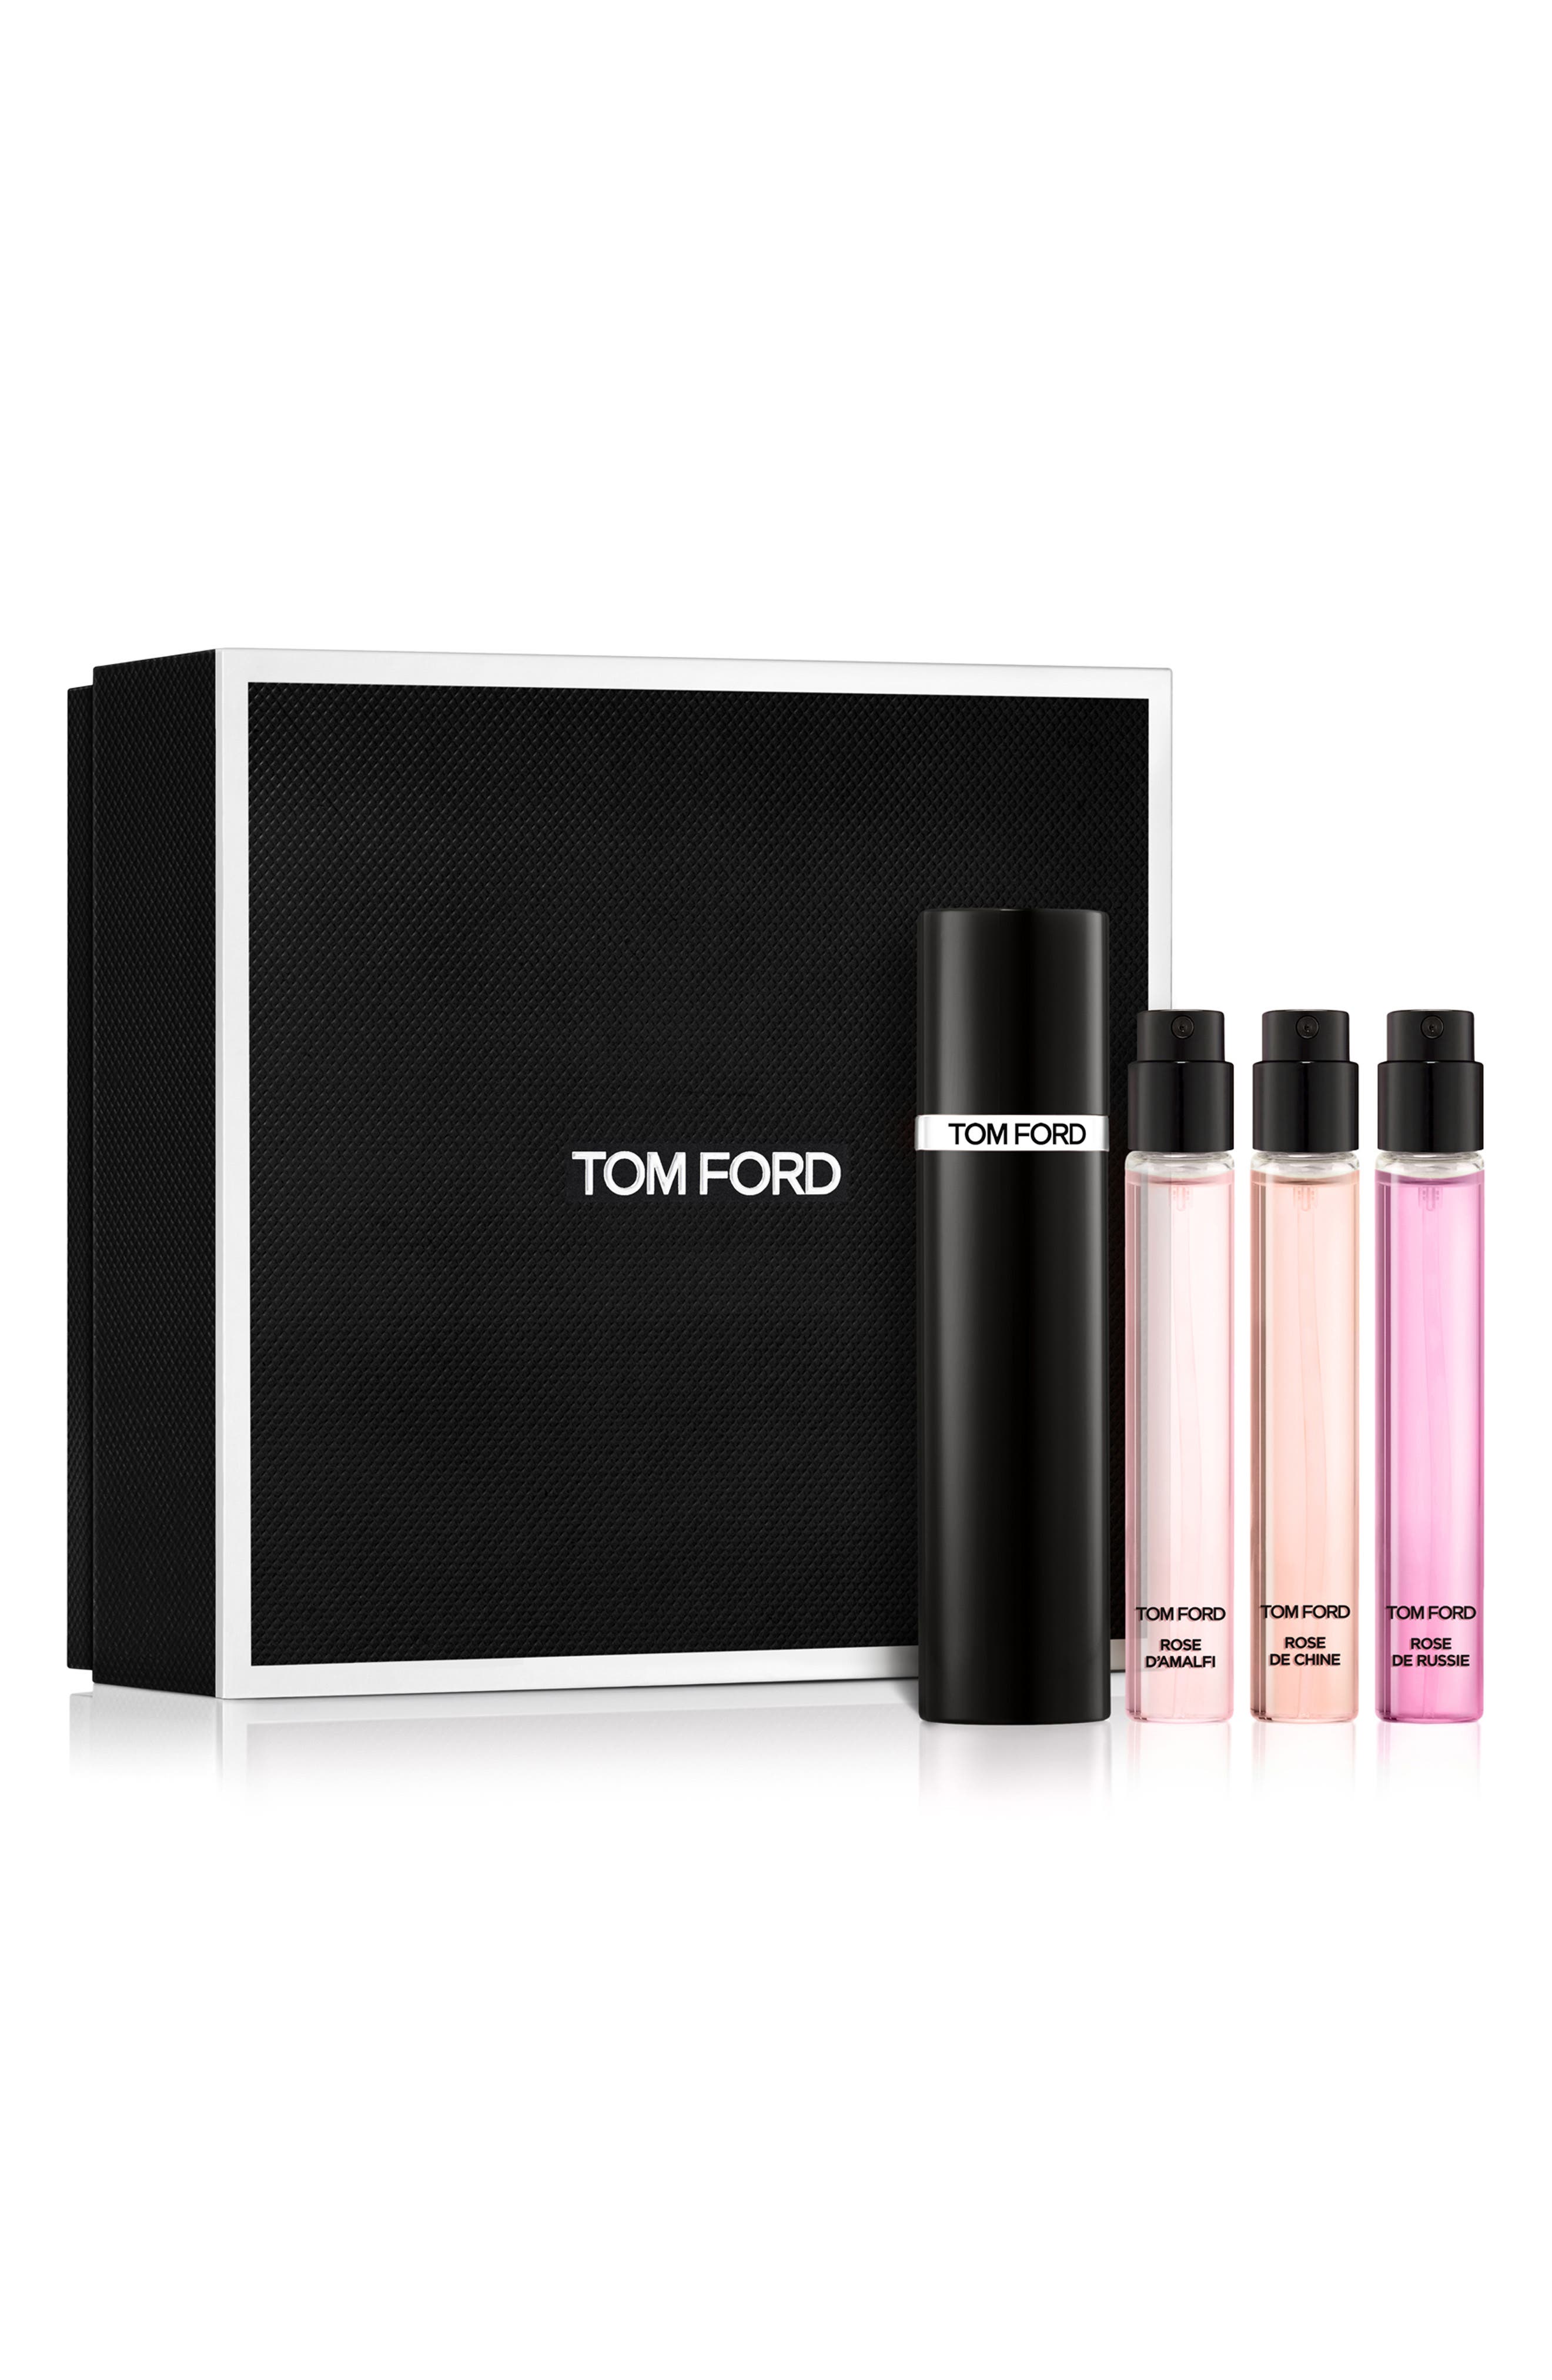 Tom Ford Private Blend Roses Fragrance Travel Set & Atomizer at Nordstrom